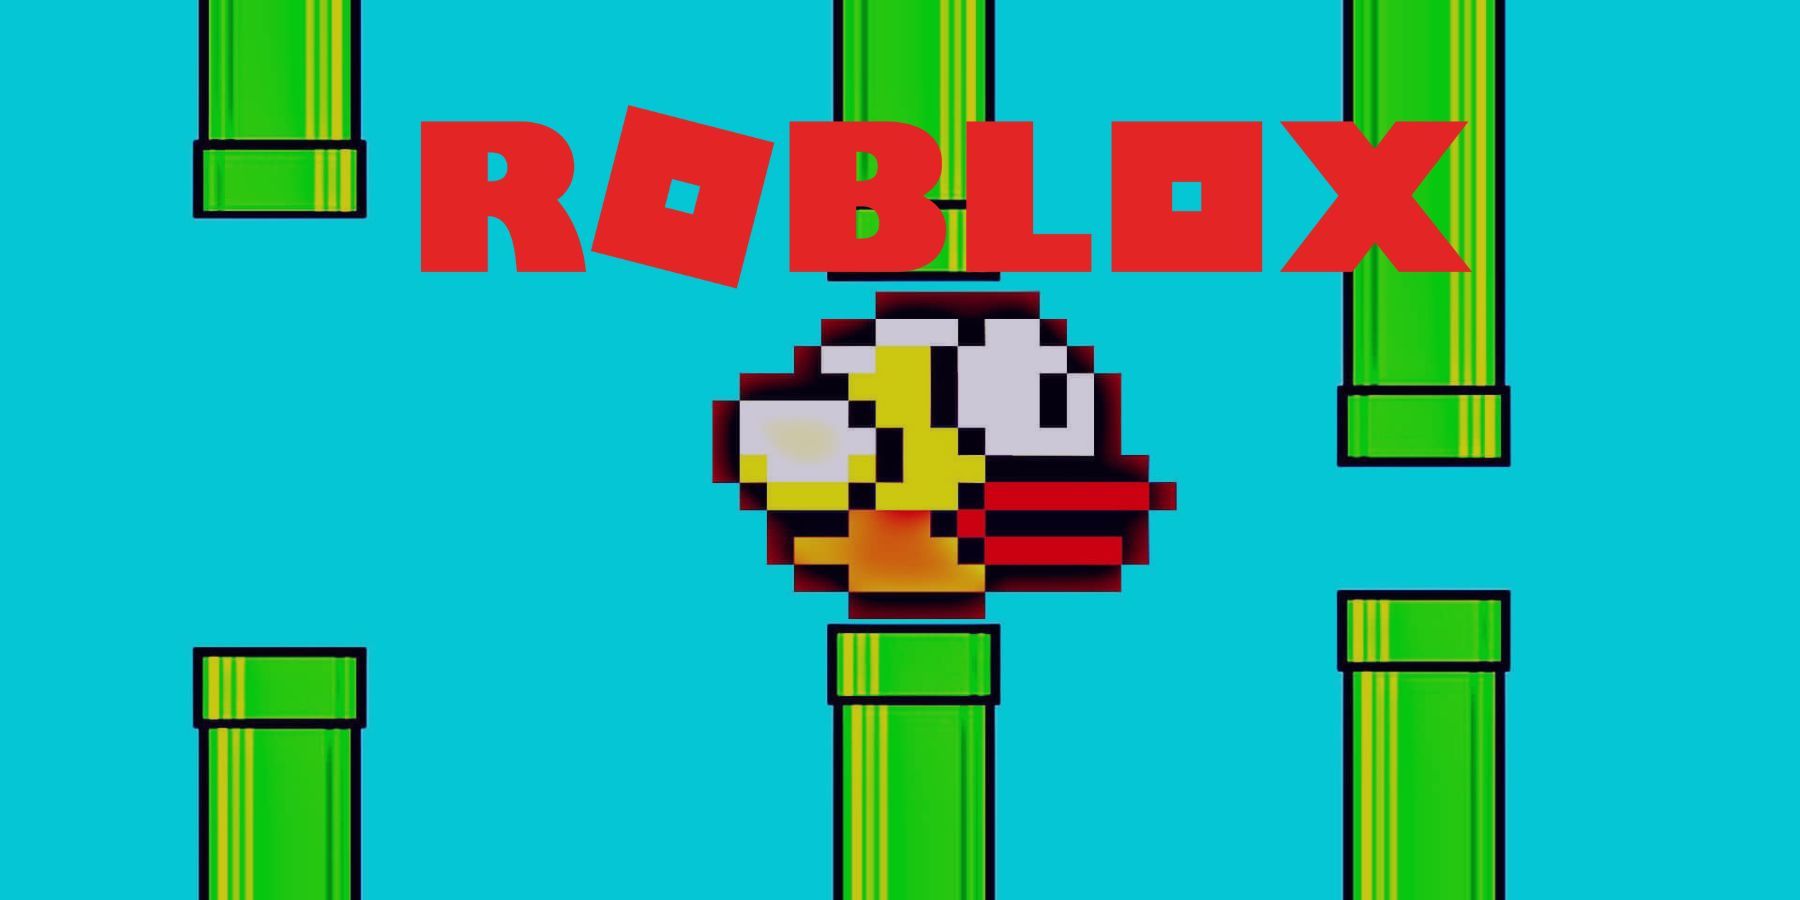 flappybird in Roblox